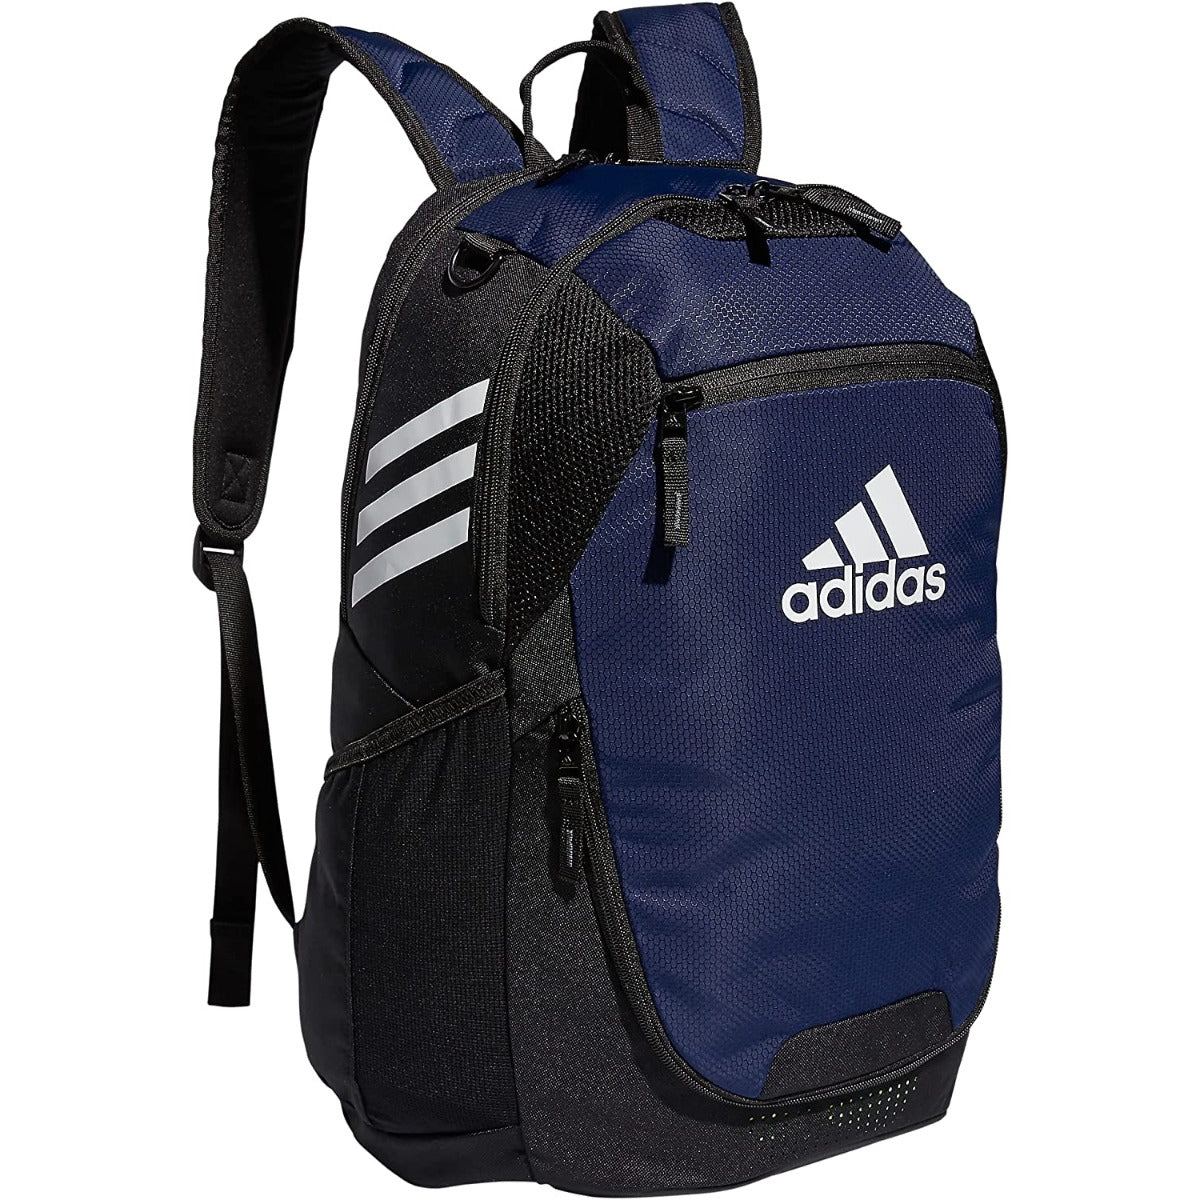 adidas Stadium 3 Backpack Navy Blue (Front)